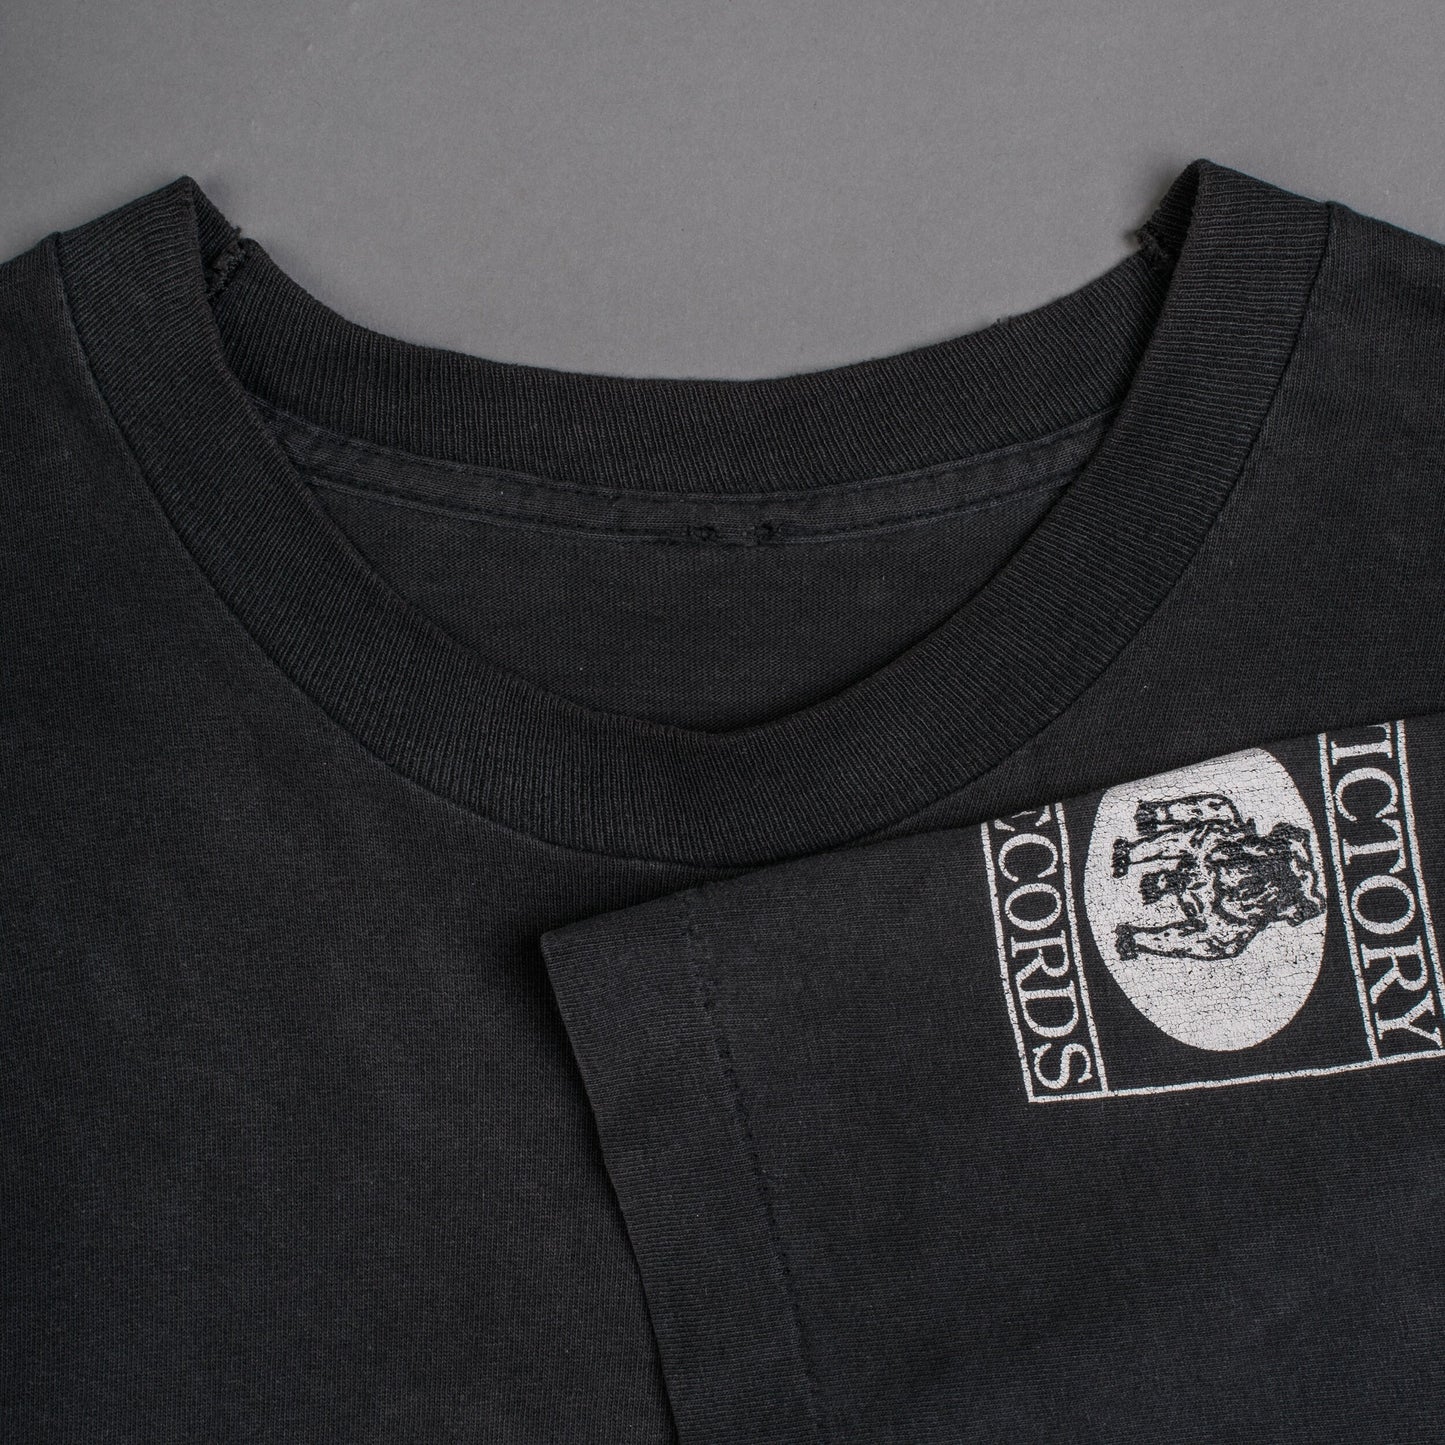 Vintage 90’s Snapcase Body Goes Numb T-Shirt